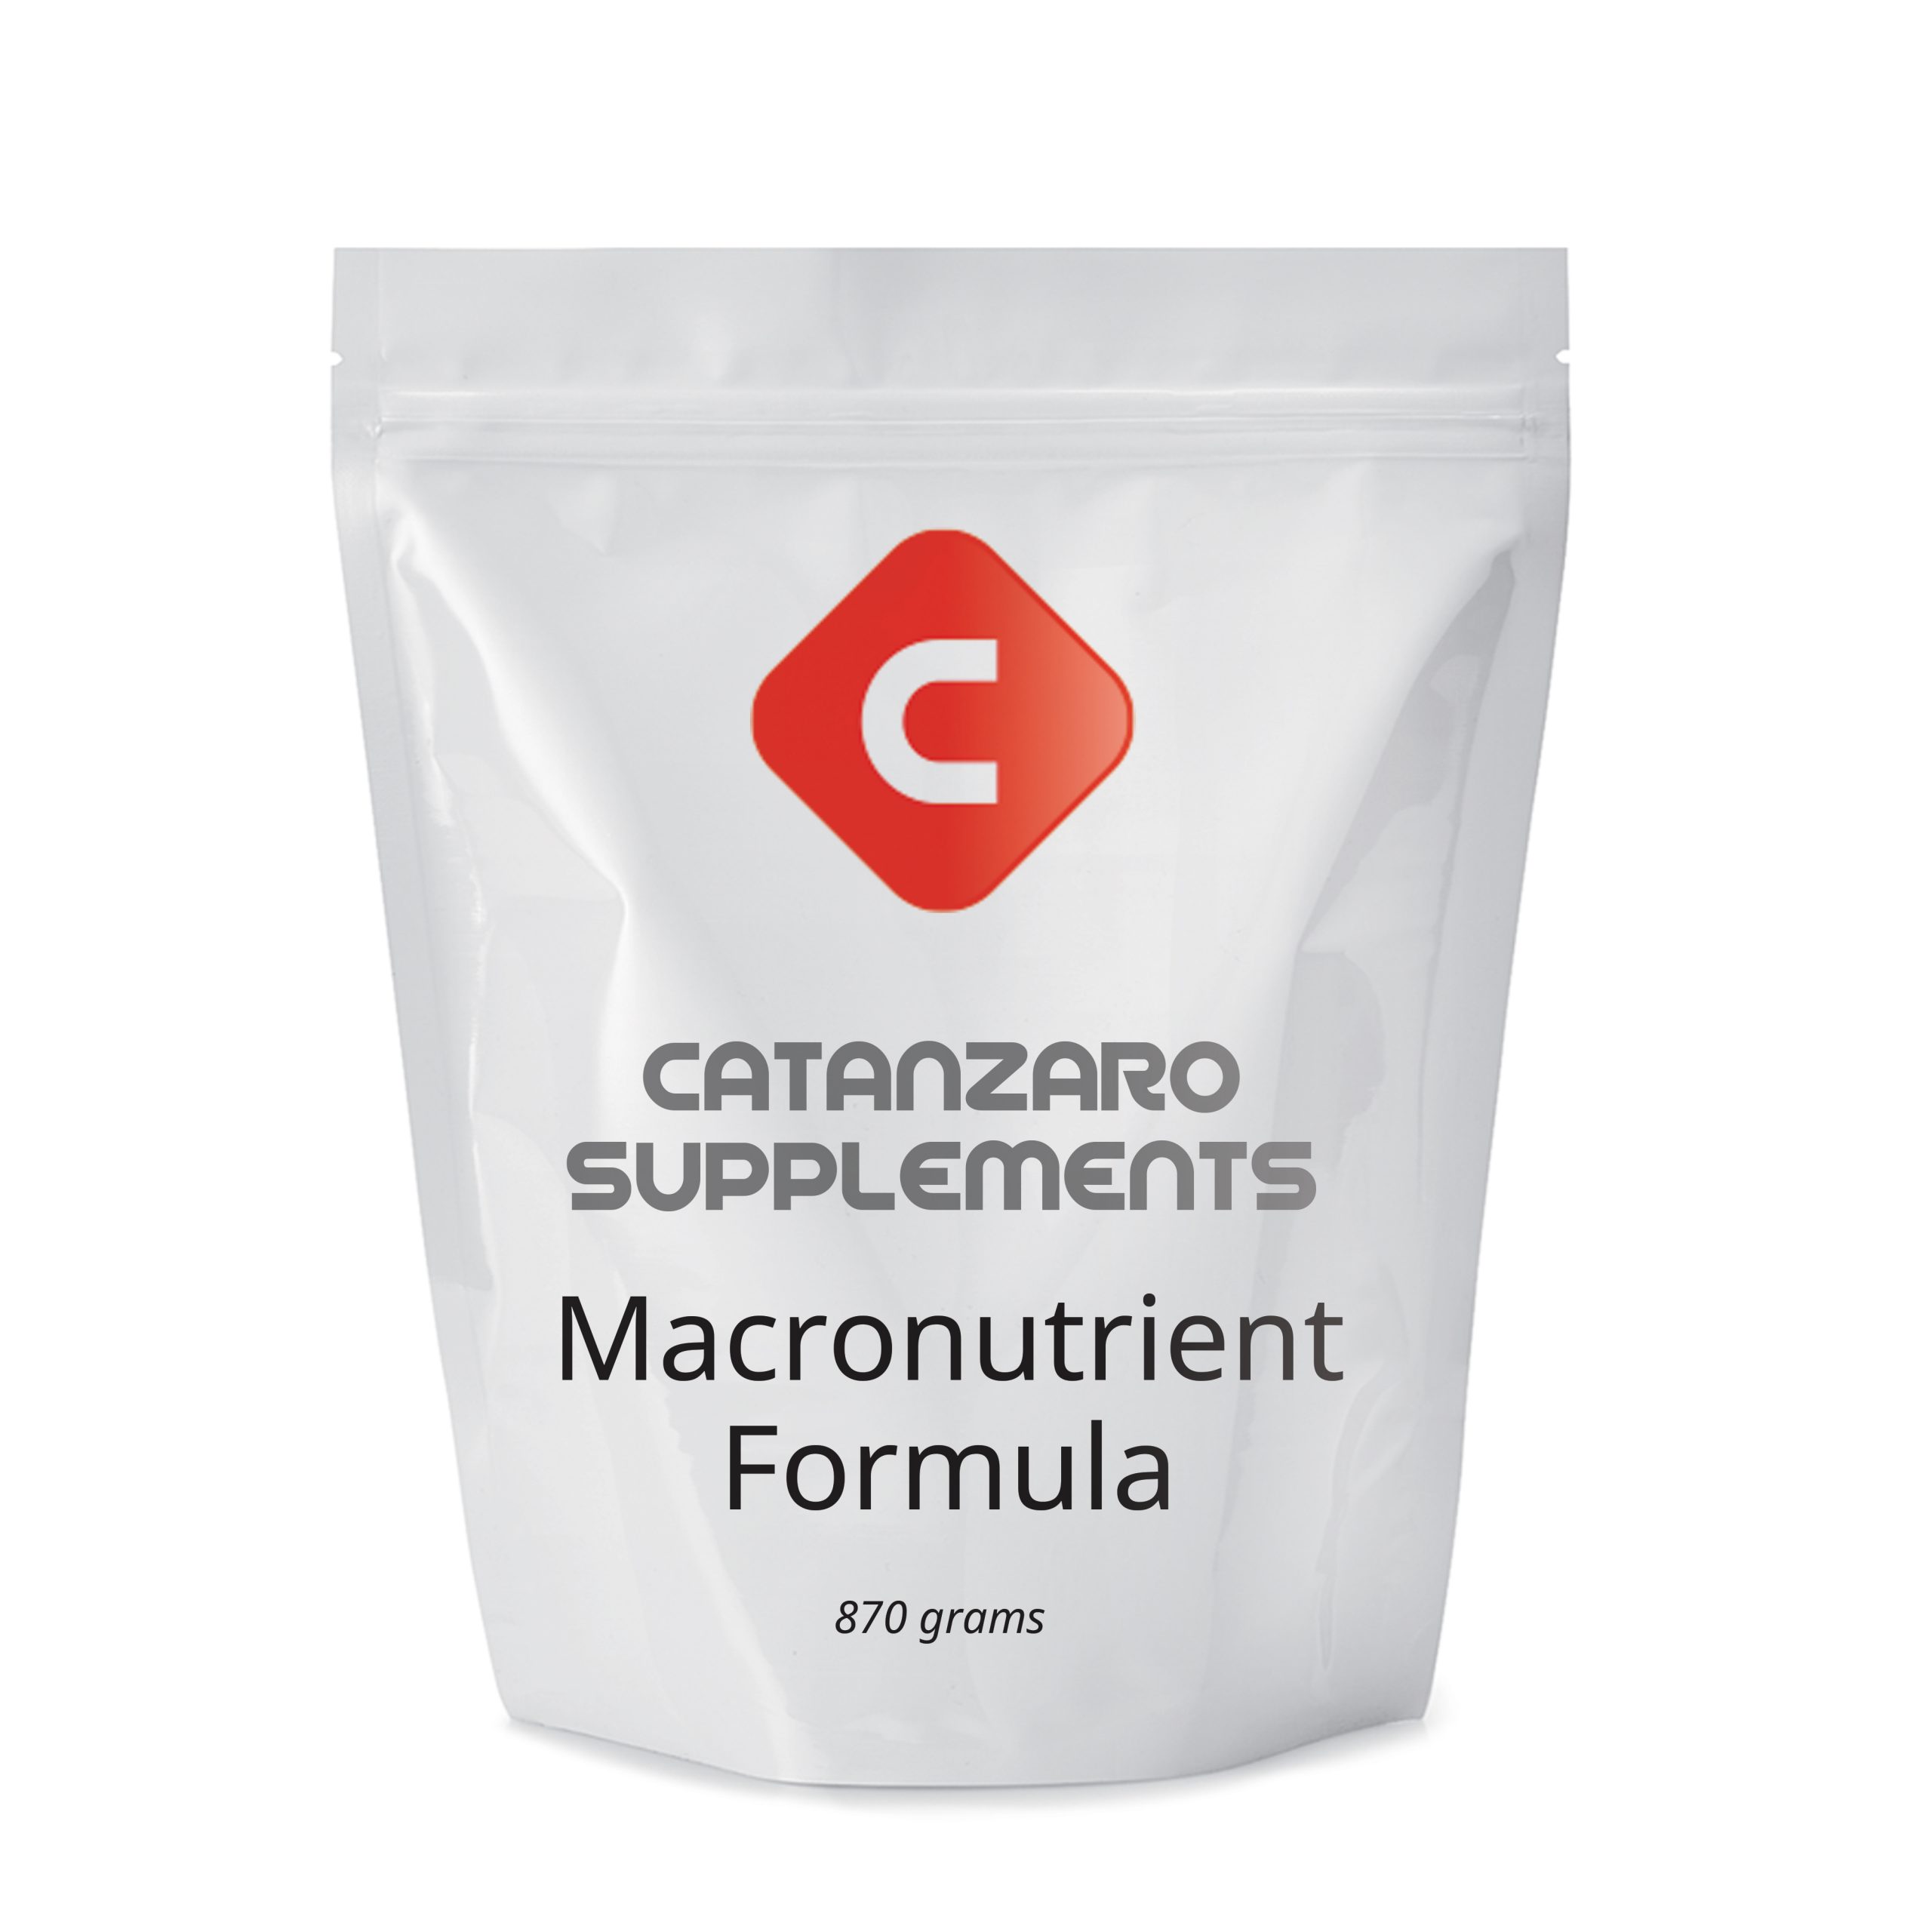 Catanzaro Supplements Macronutrient Formula